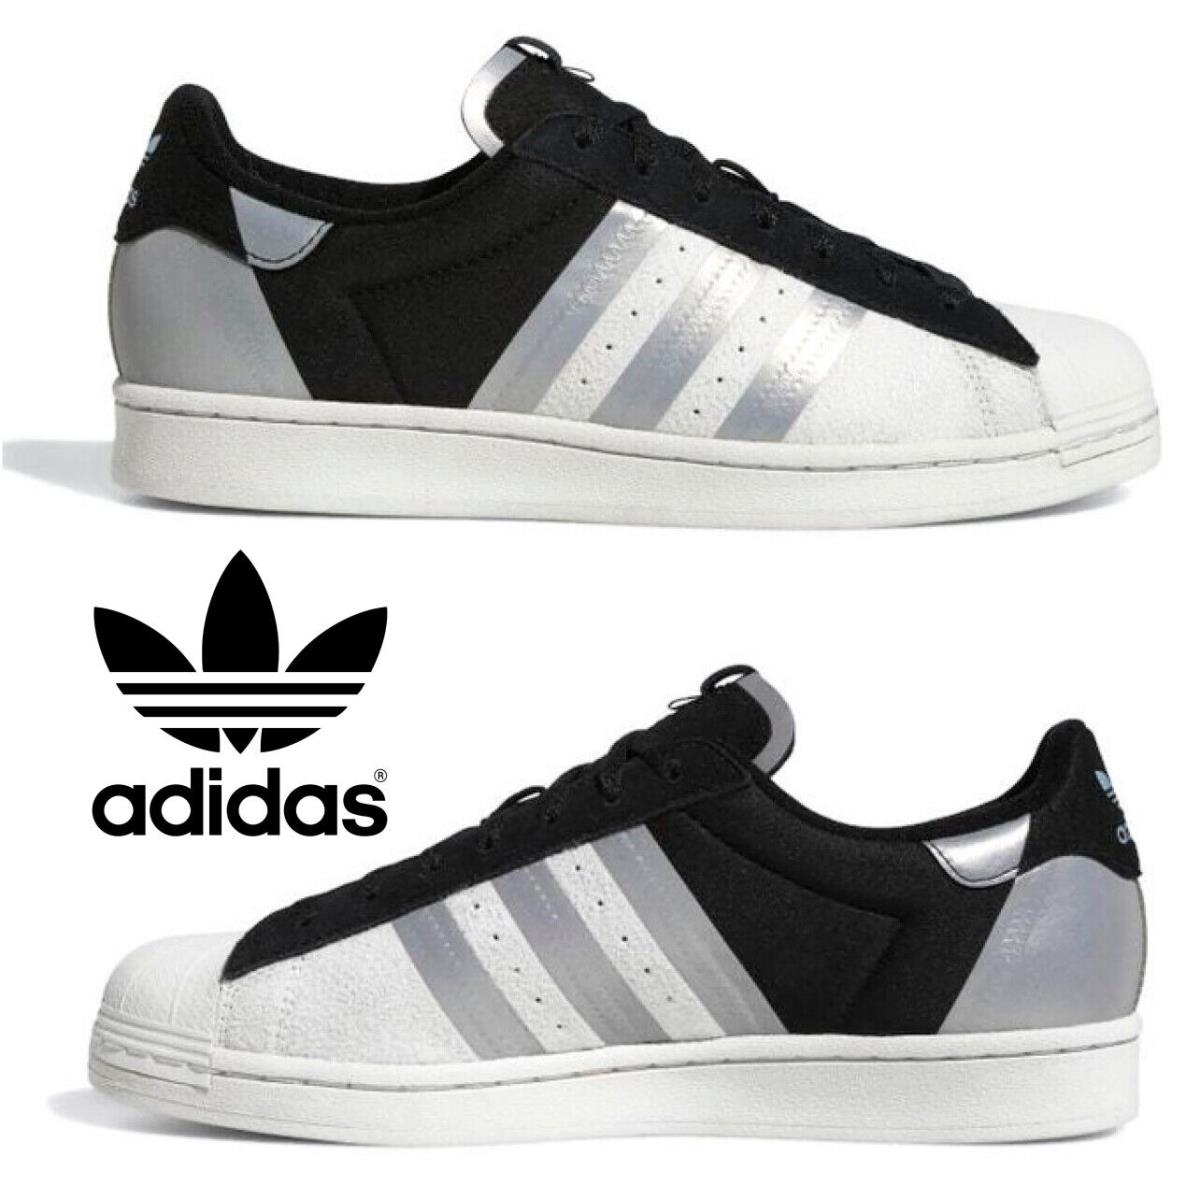 Adidas Originals Superstar Men`s Sneakers Comfort Sport Casual Shoes Black Grey